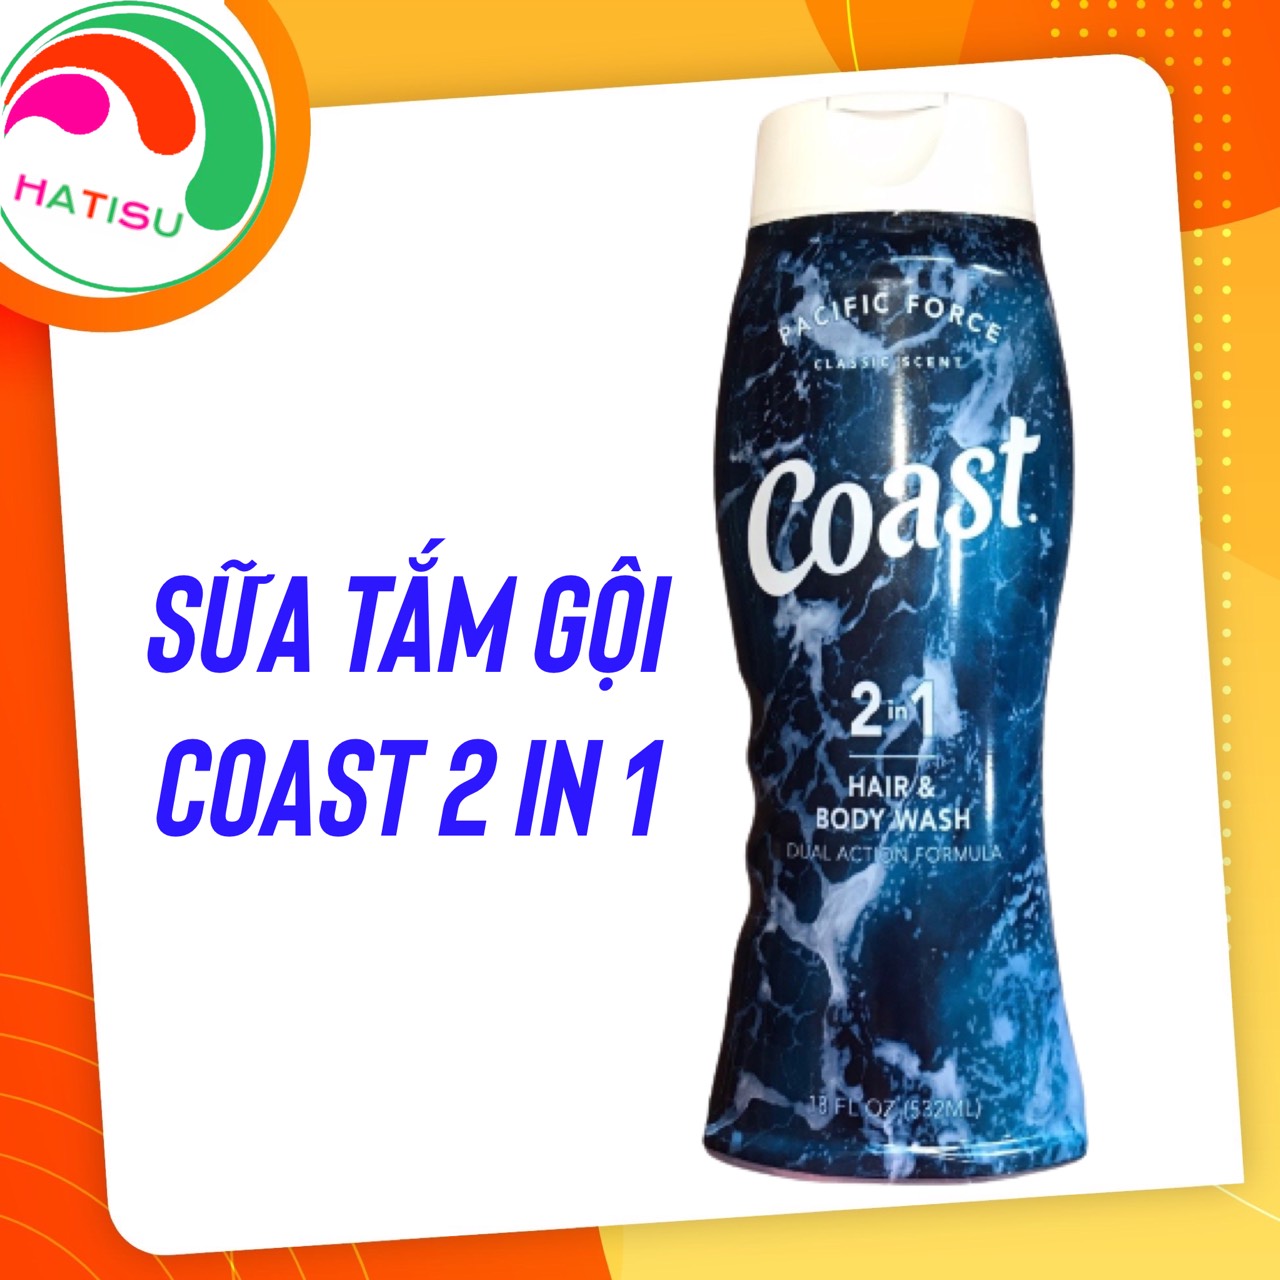 Dầu gội tắm 2in1 Coast - Nam - 532ml HATISU thumbnail